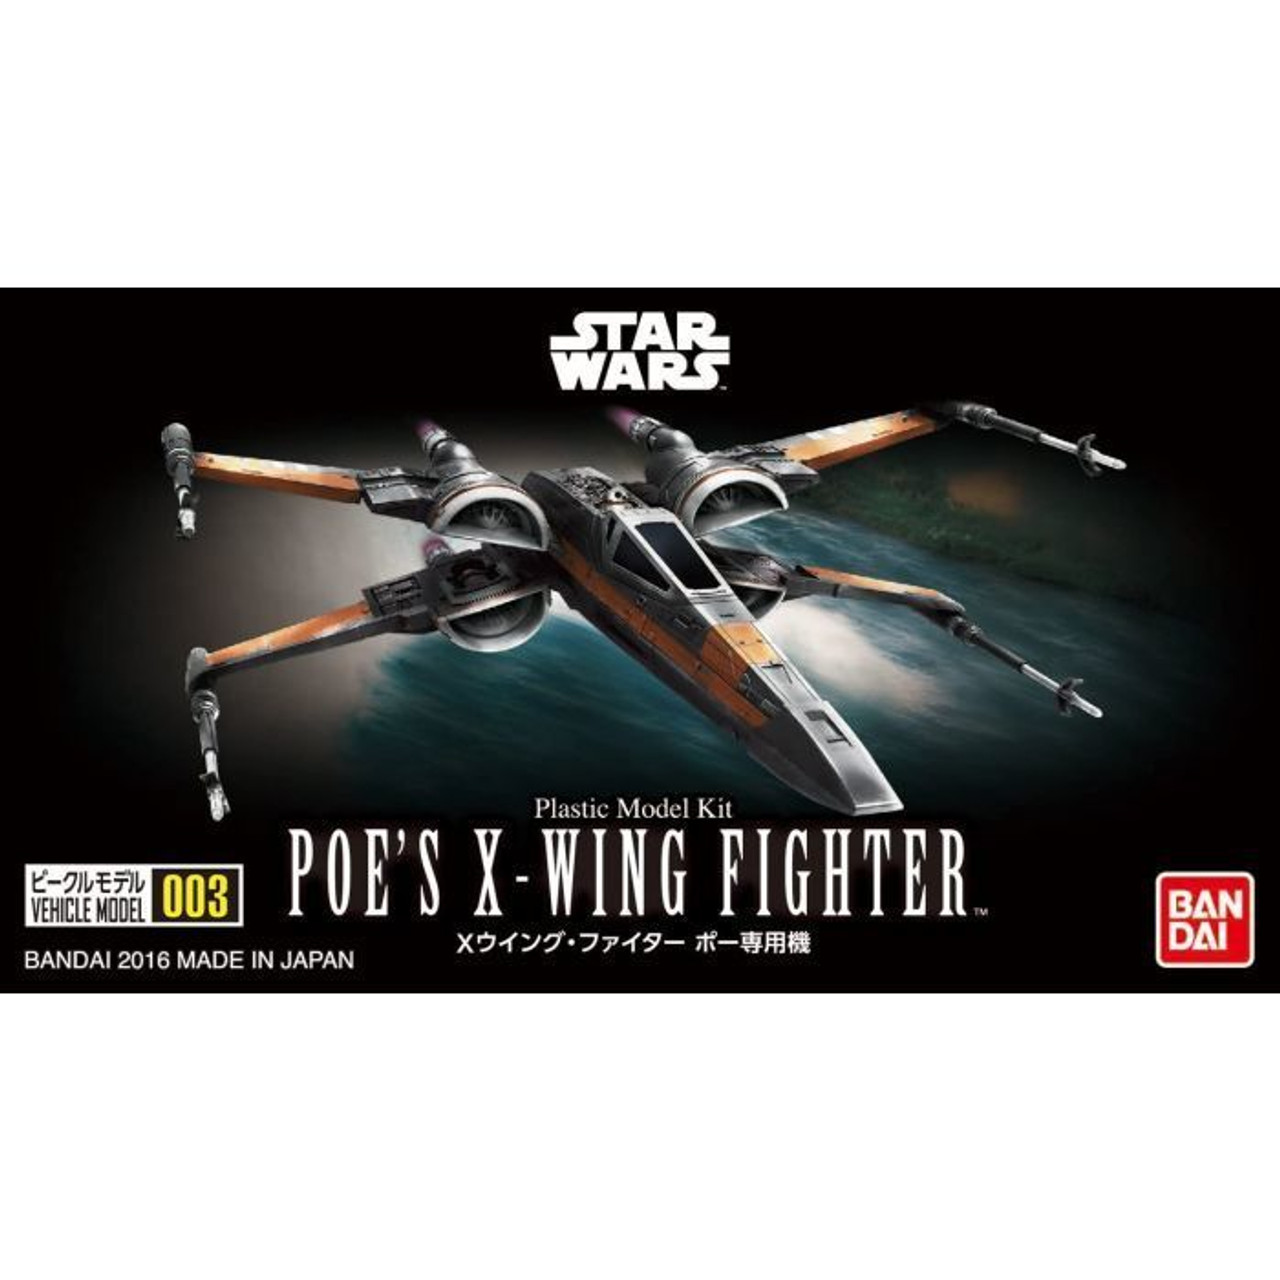 BAN2322886 Bandai Star Wars Vehicle Model 003 Poe's X-Wing Starfighter